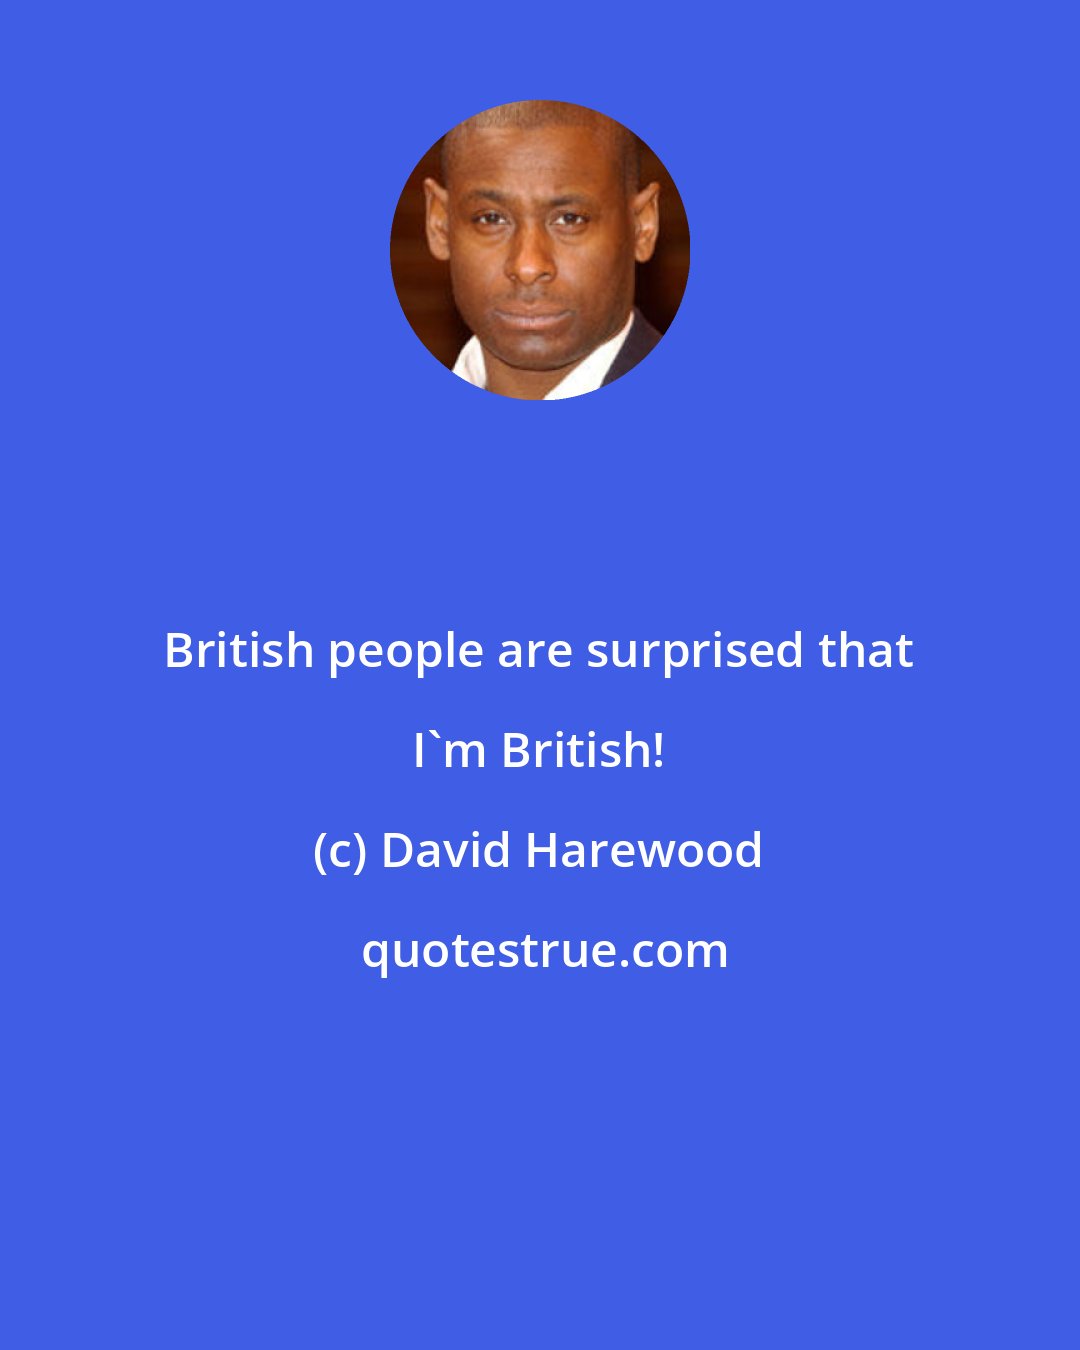 David Harewood: British people are surprised that I'm British!